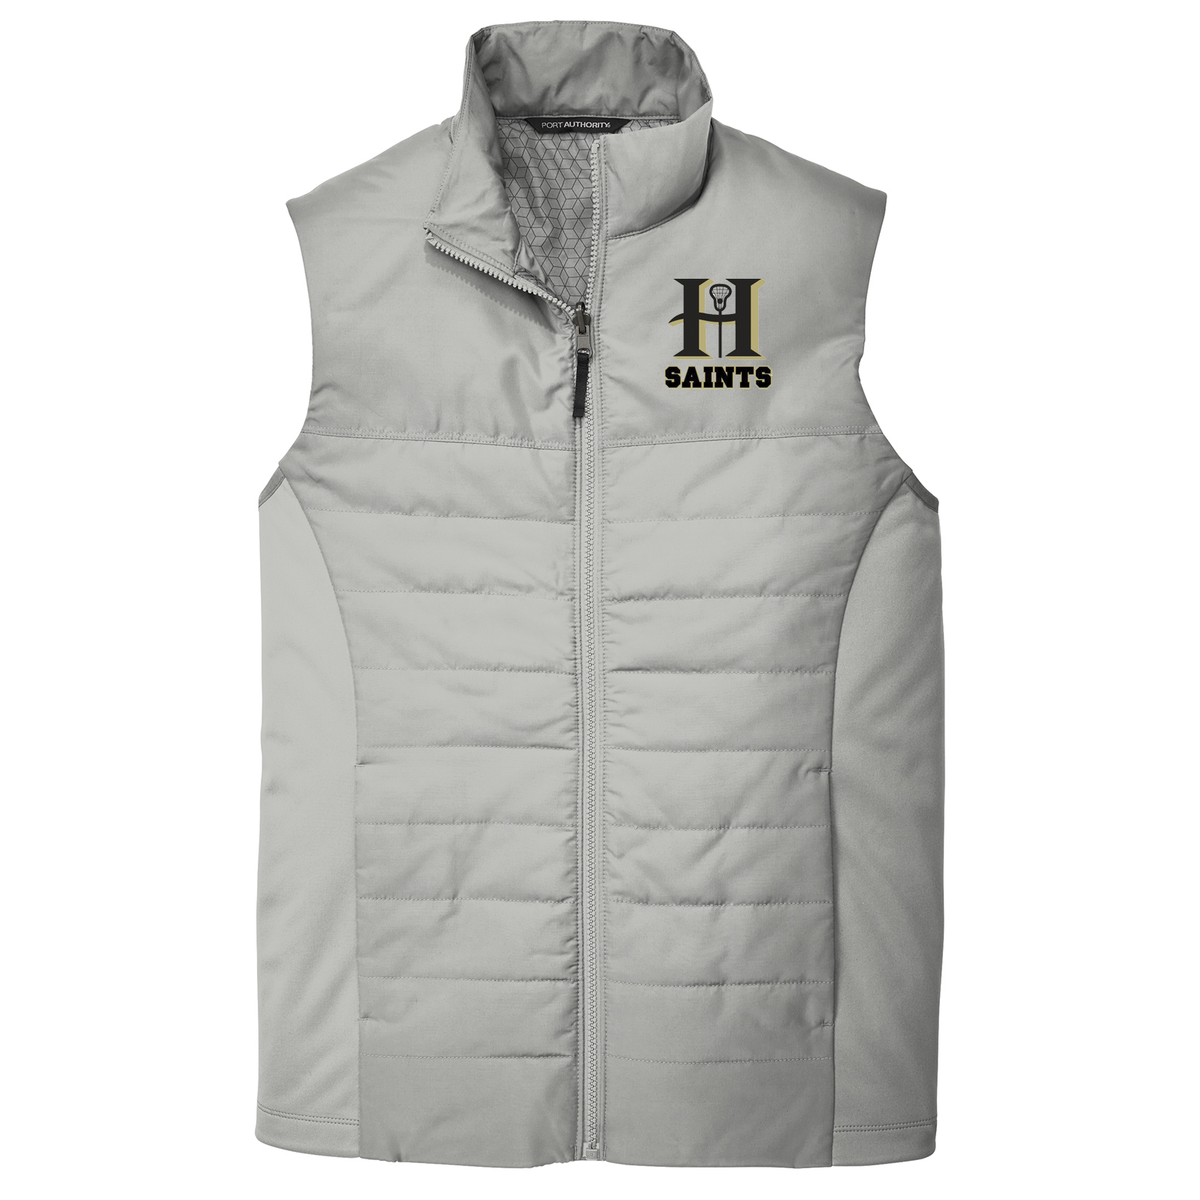 HAYLA Saints Grey Vest